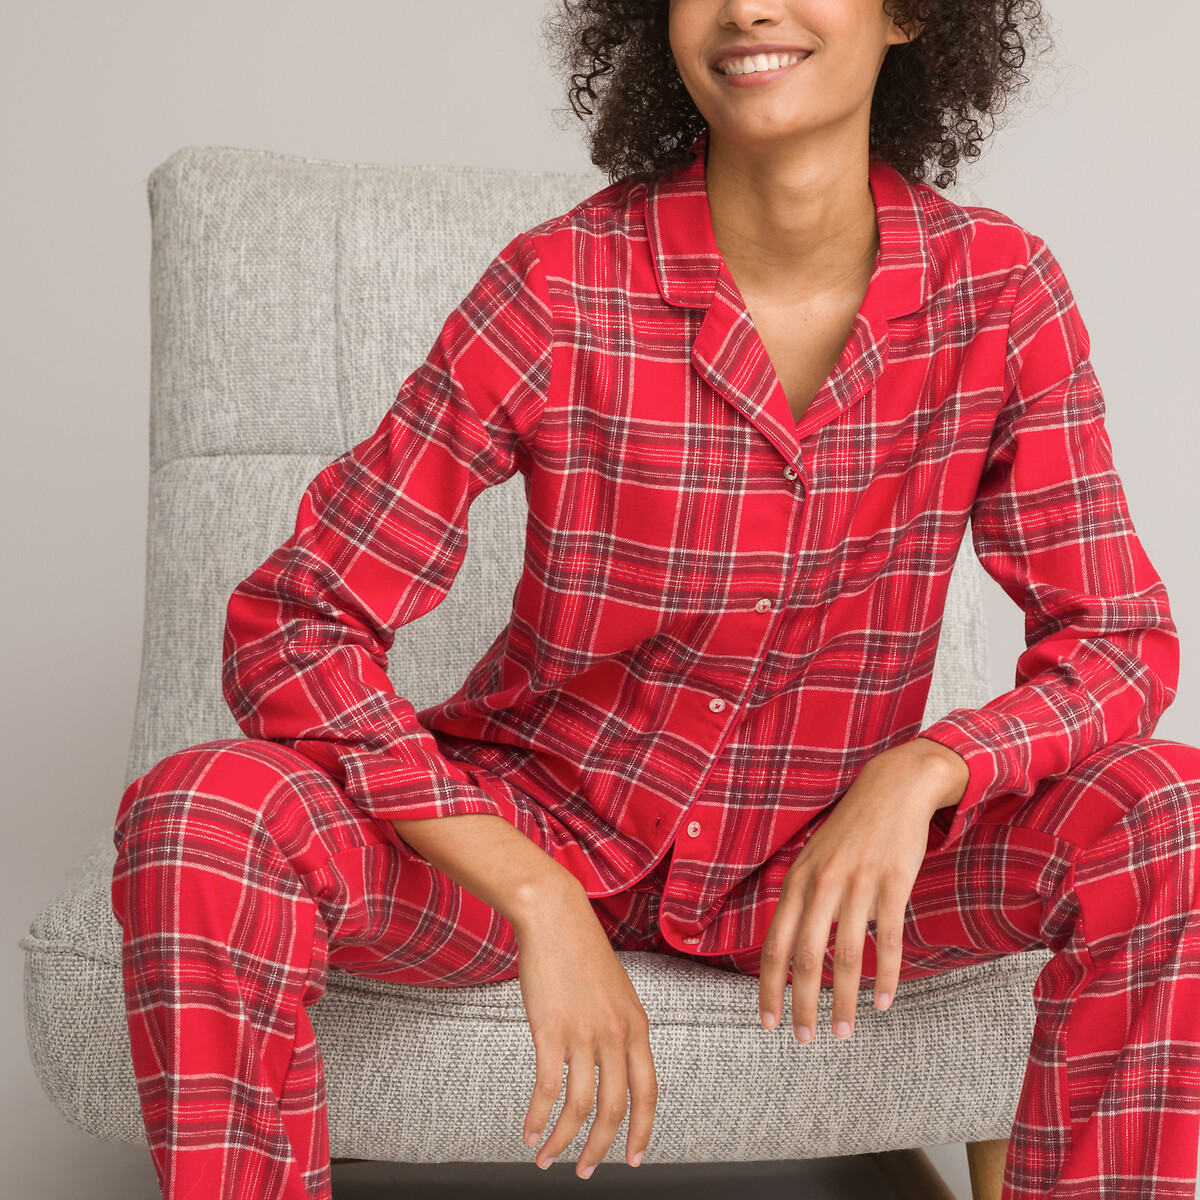 Pyjamas 100% Coton FLASHPIJAMAS Pyjamas 2 pièces pour Femmes Pyjamas de Printemps et d'été. 